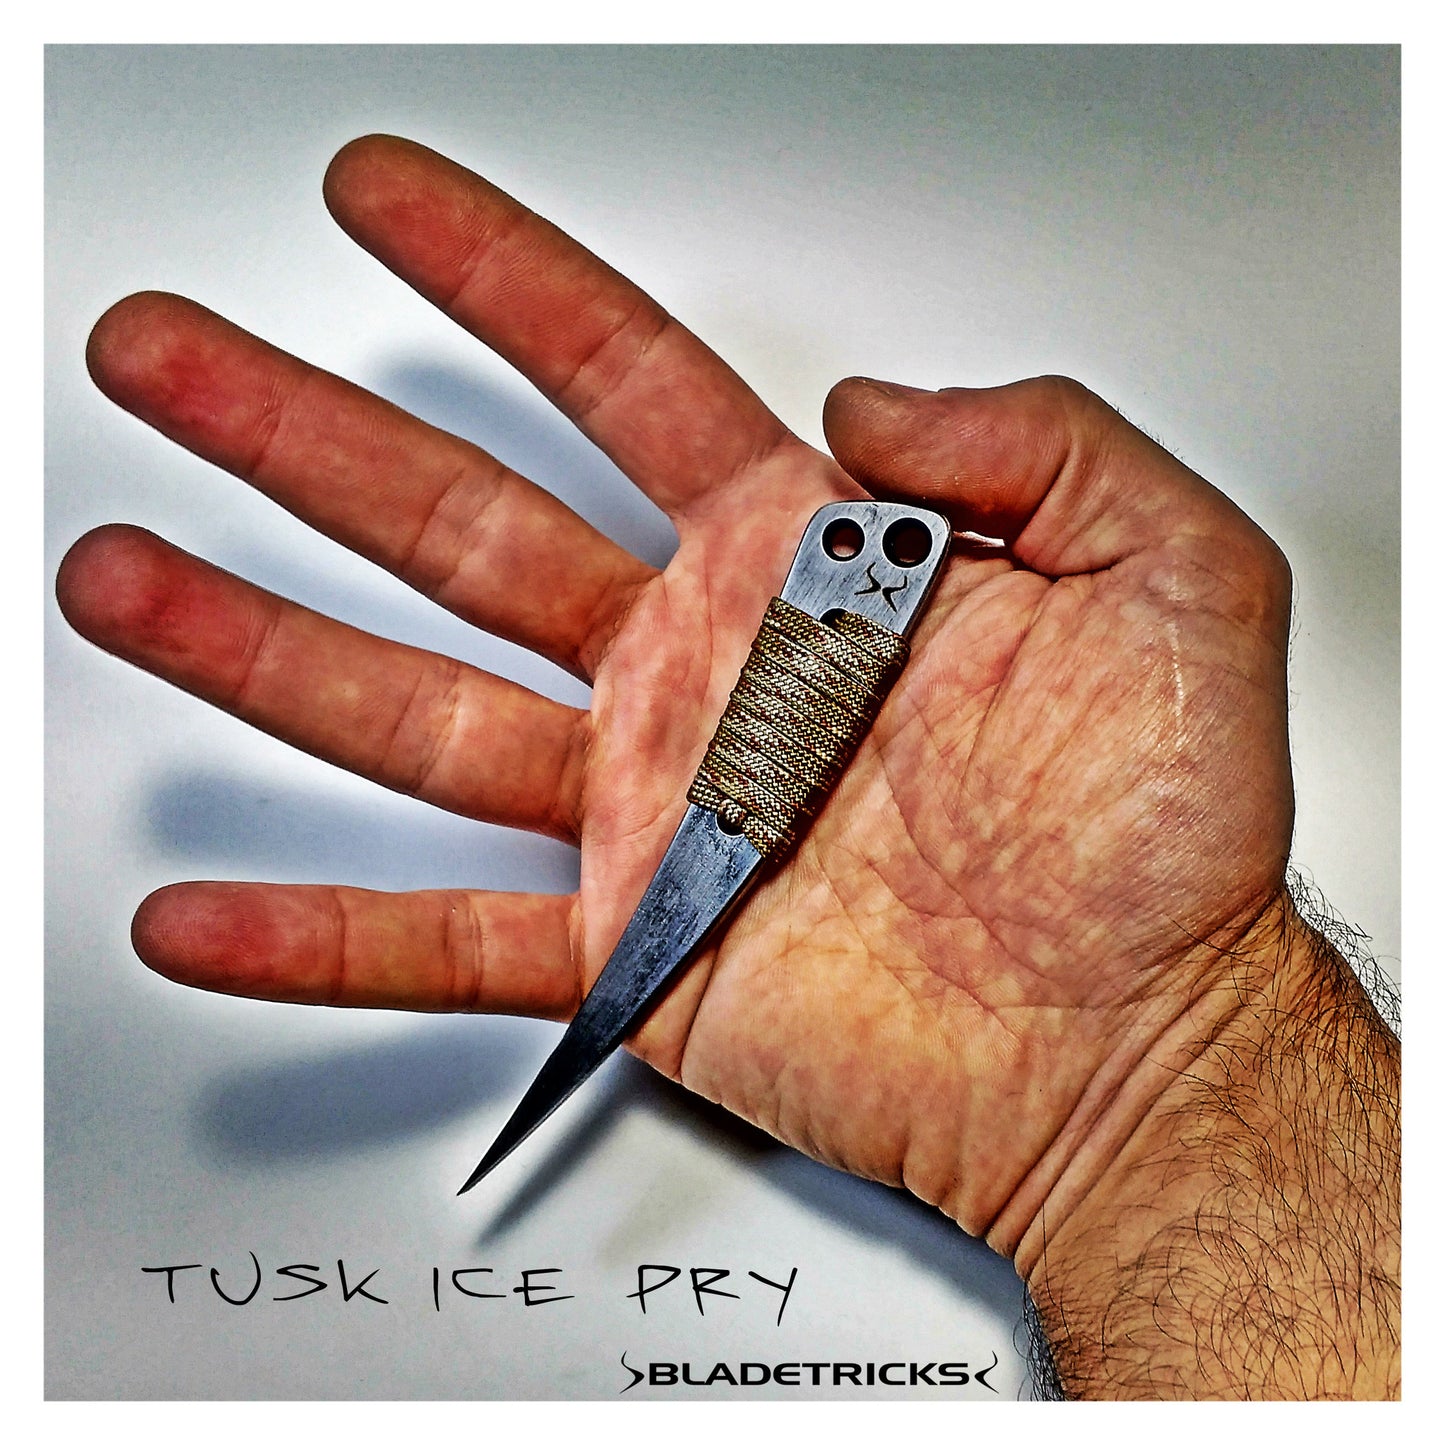 Bladetricks knifemaker Tusk power self defense weapon